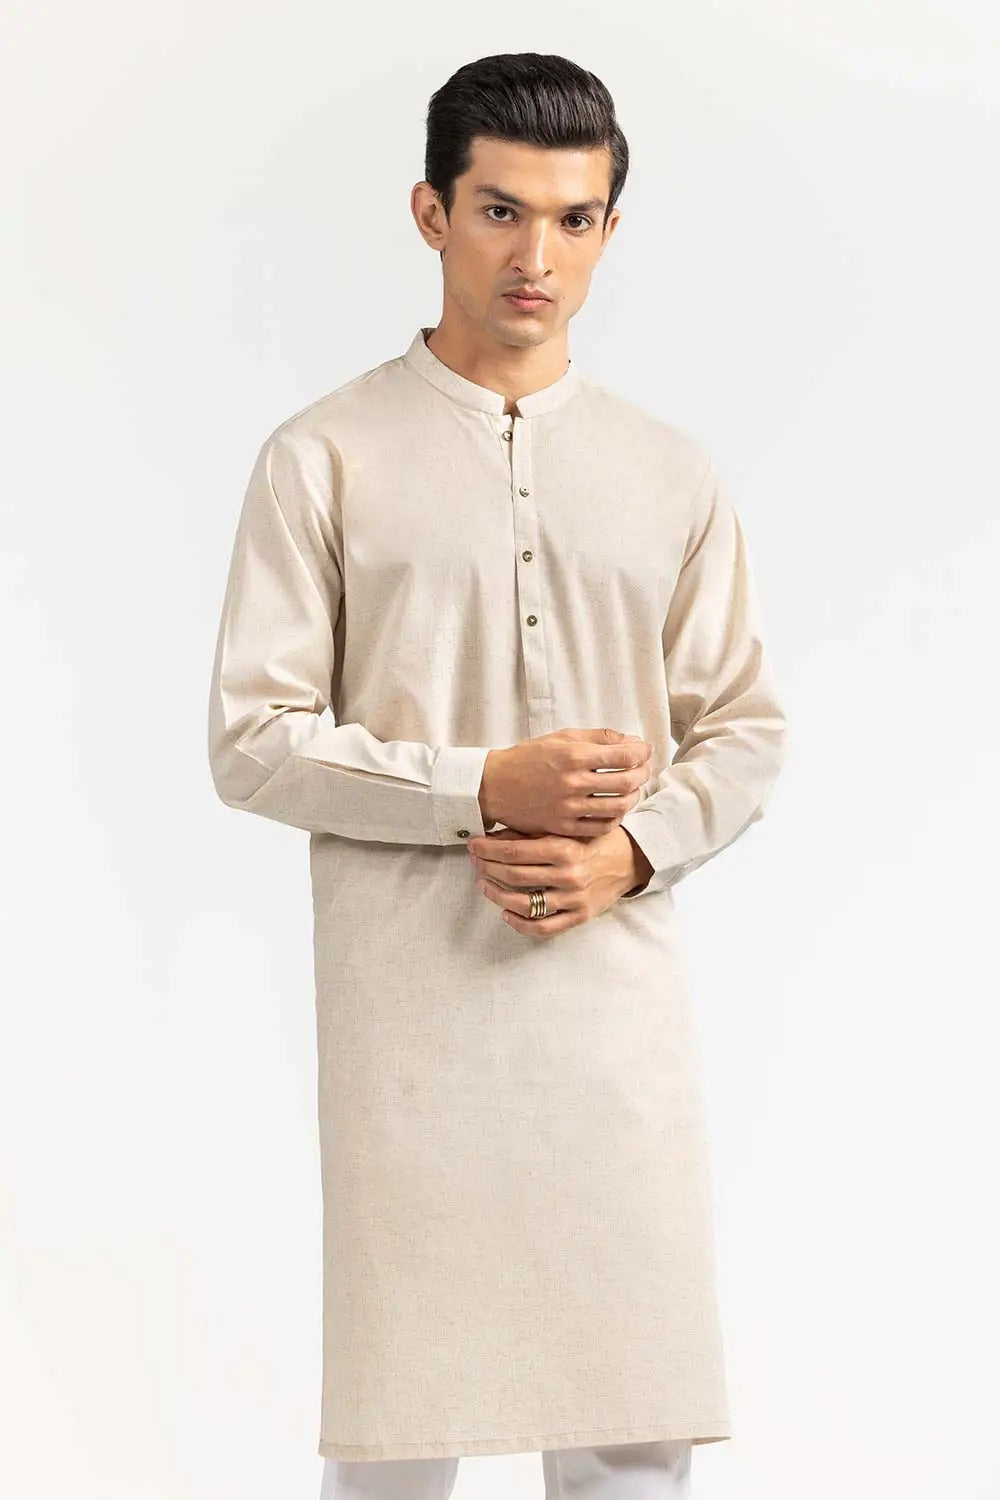 Gul Ahmed Ready to Wear Basic Cream Kurta - KP-1851